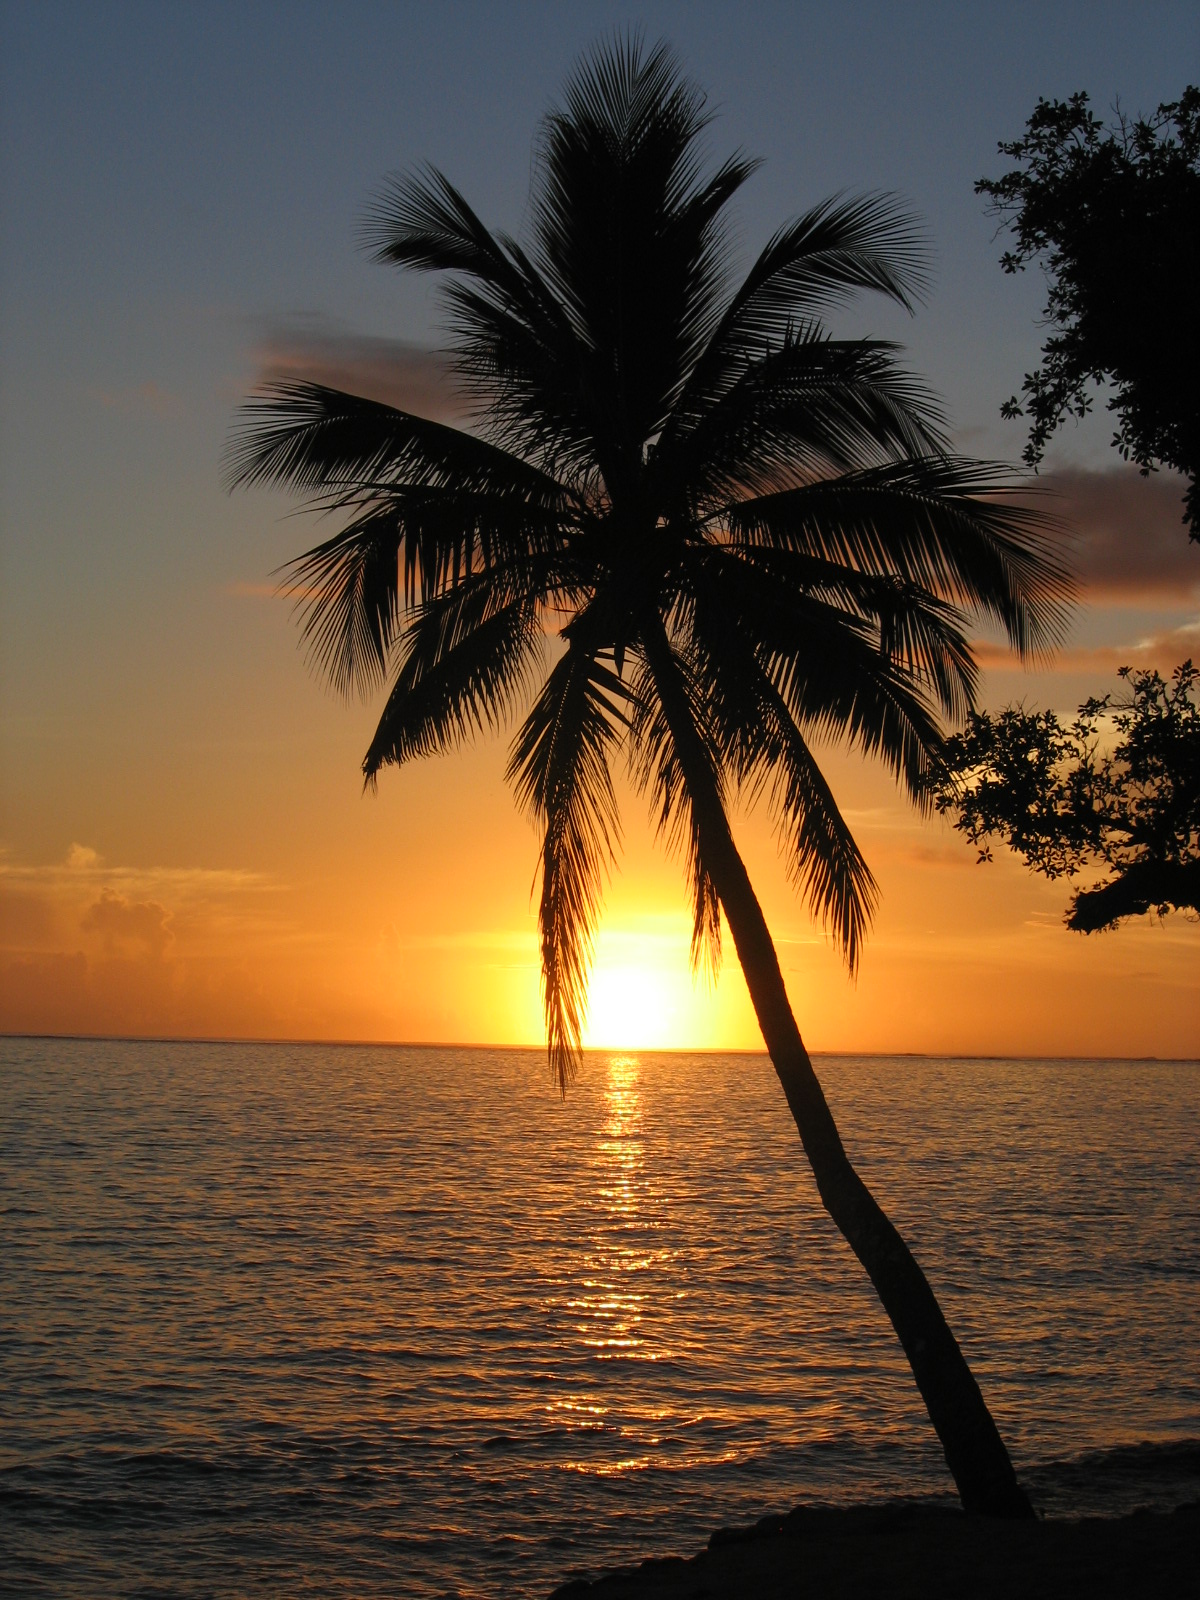 With Coconut Palm Tree Fiji Jpg Wikipedia The Encyclopedia